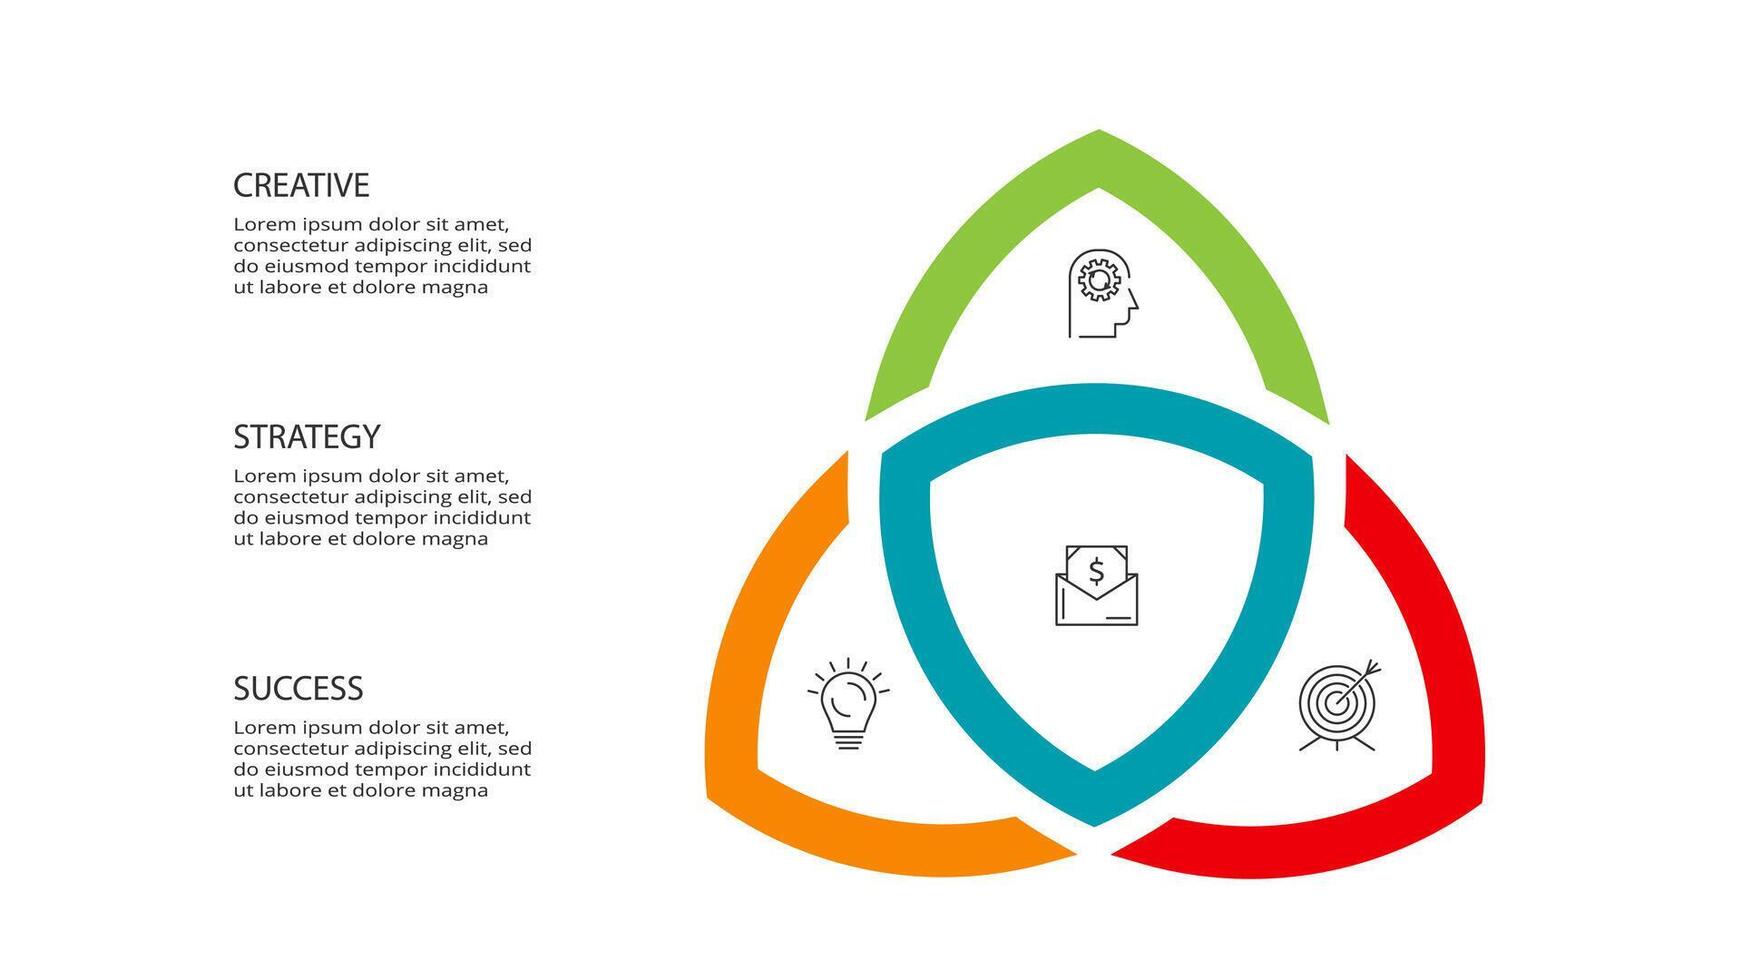 creativo concepto para infografía con 3 pasos, opciones, partes o procesos. negocio datos visualización. vector